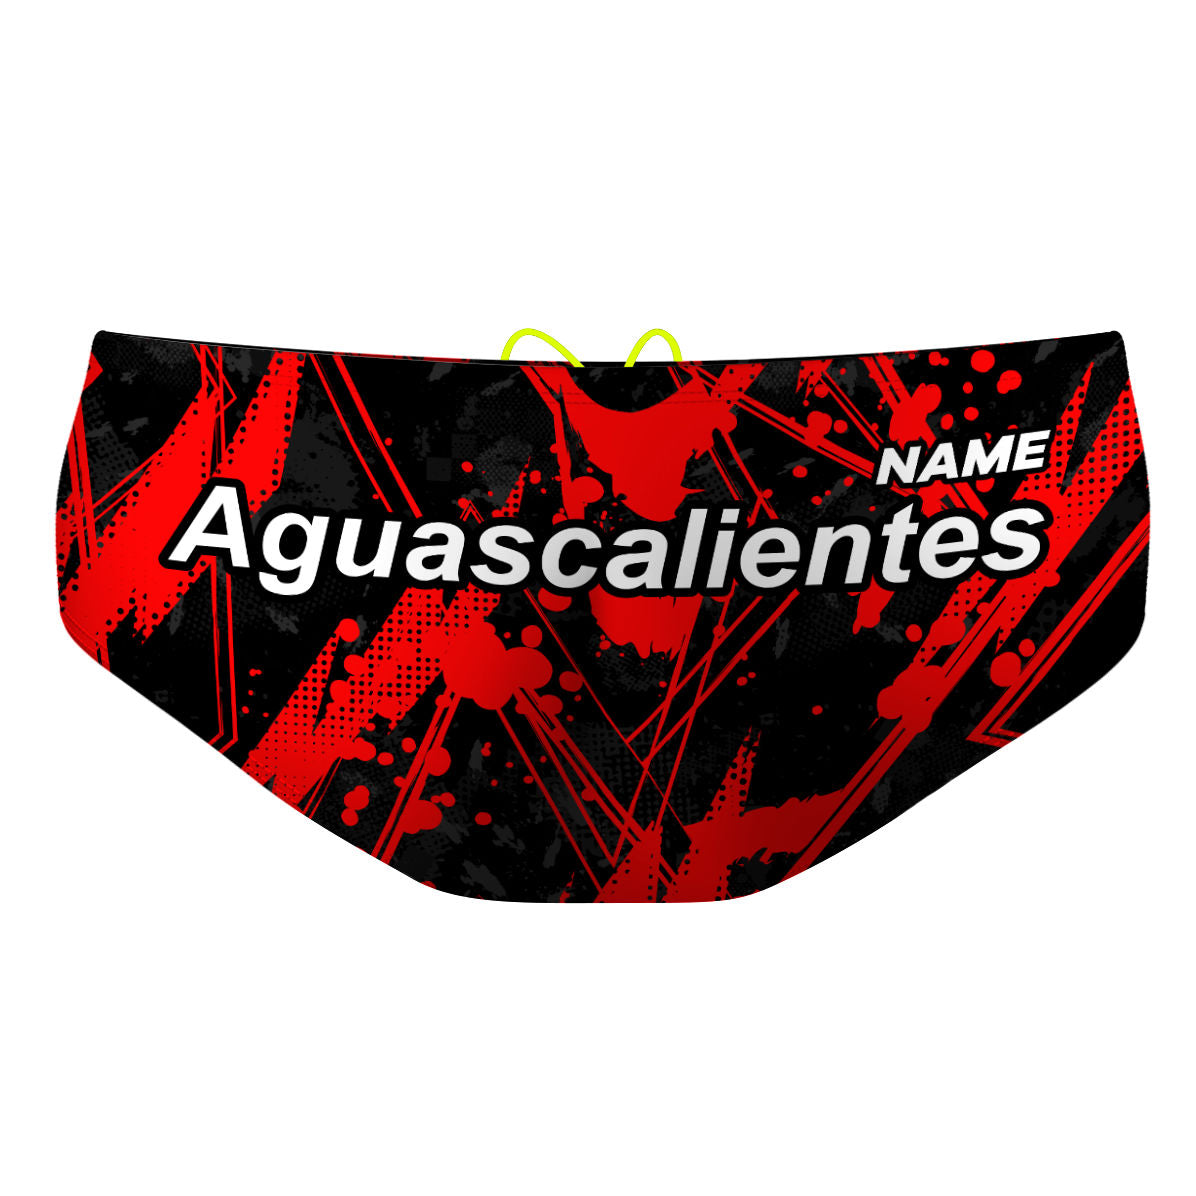 NV Aguascalientes - Classic Brief Swimsuit